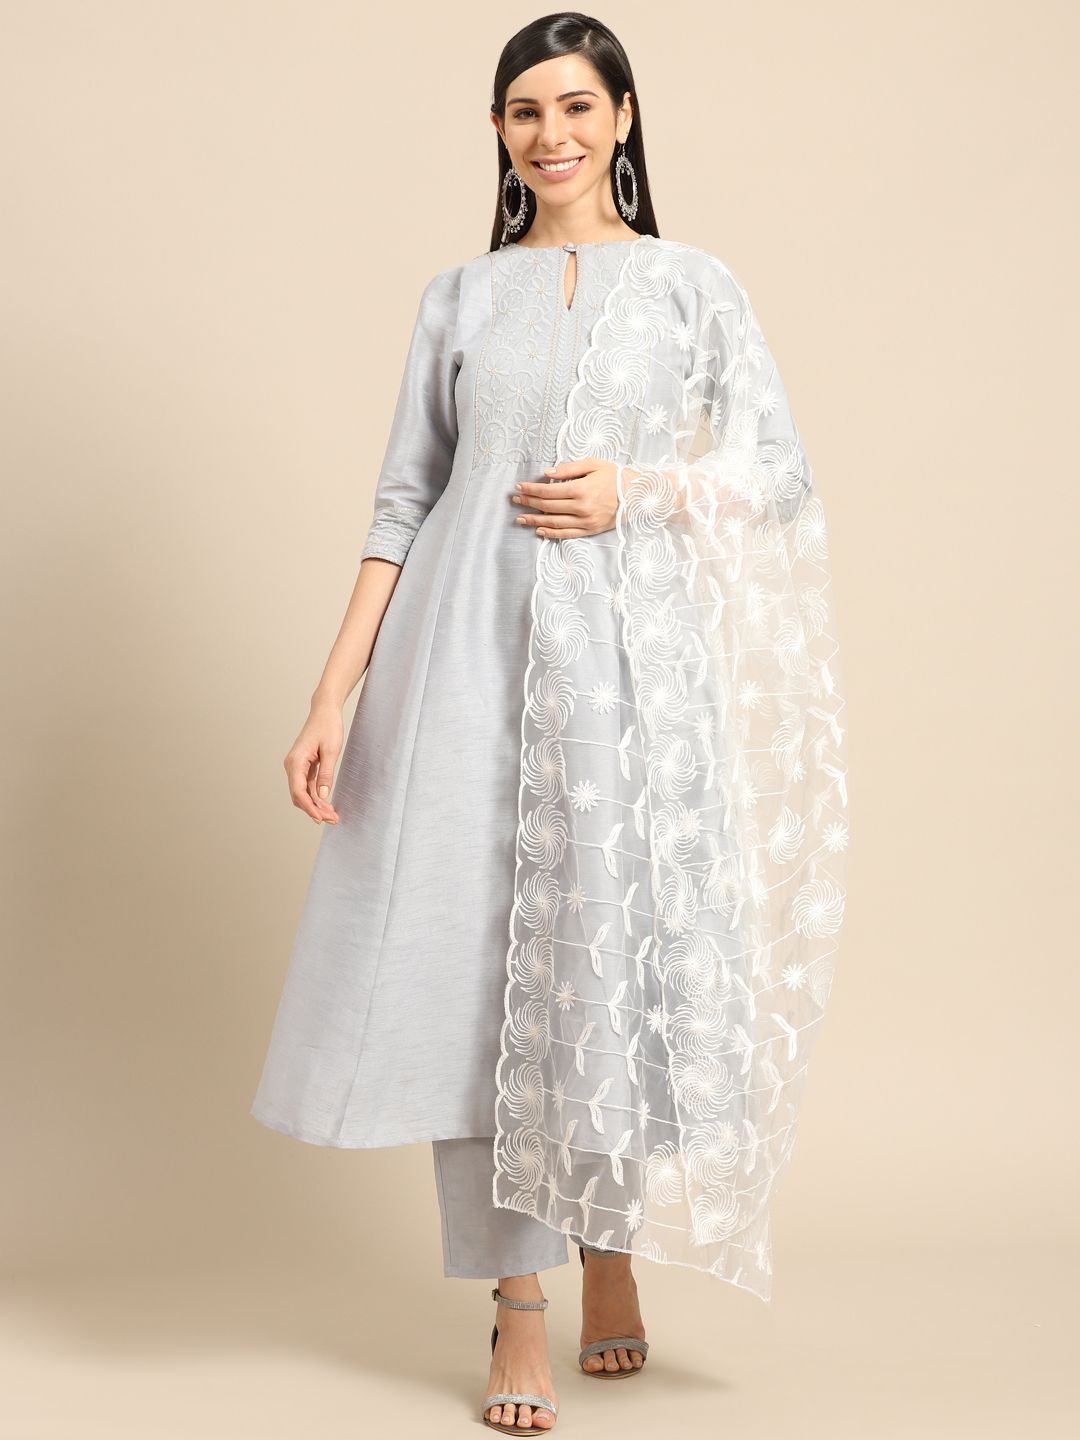 Saadgi White Aari Embroidered Net Dupatta Price in India